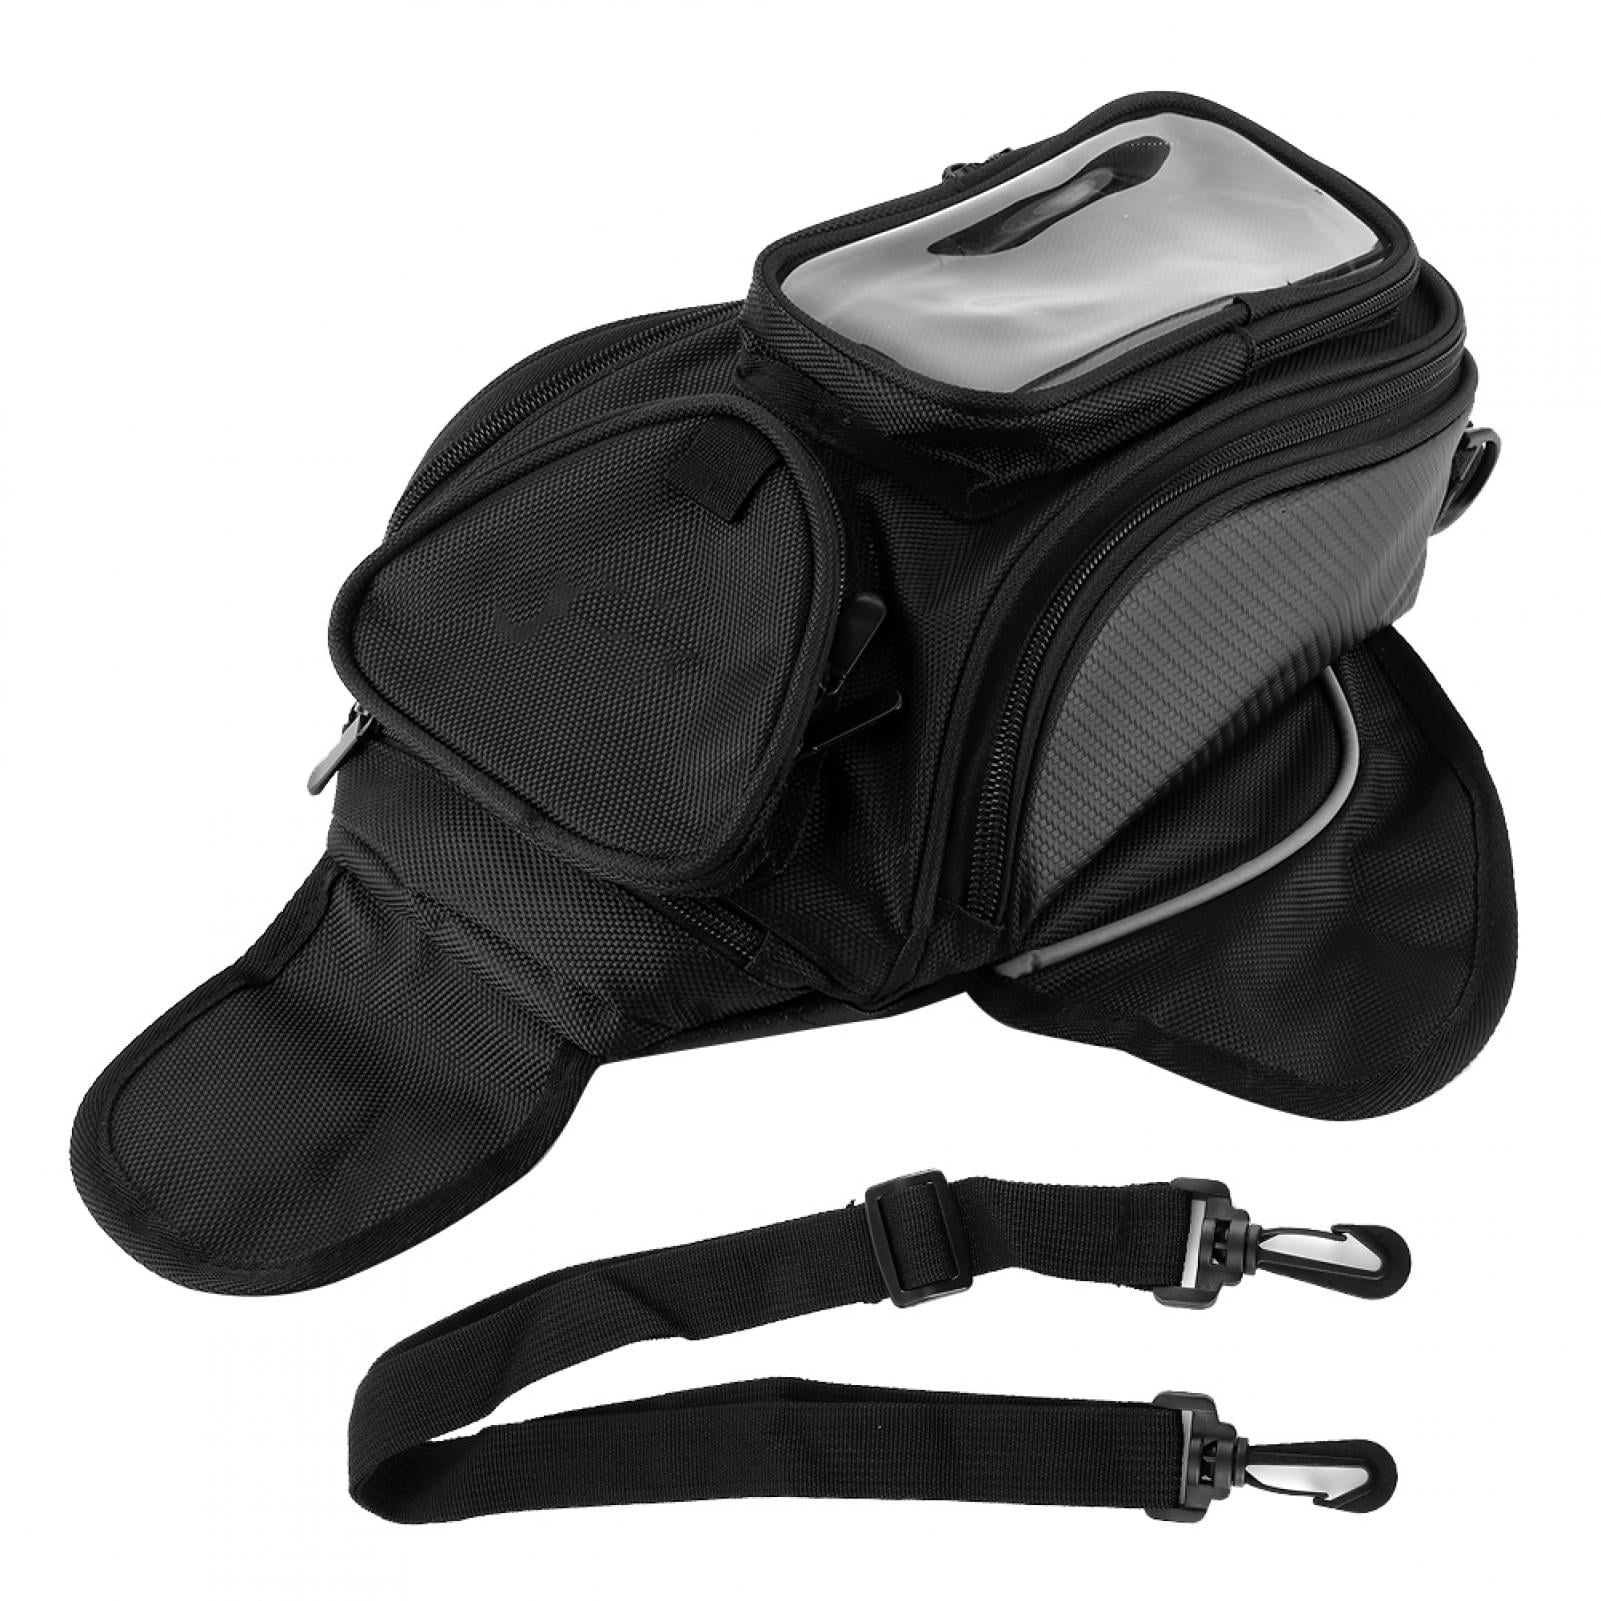 ANGGREK Motorcycle Tank Bag, Universal Magnetic Tank Waterproof Touch Screen GPS Phone Holder For Motorcycle Riding -